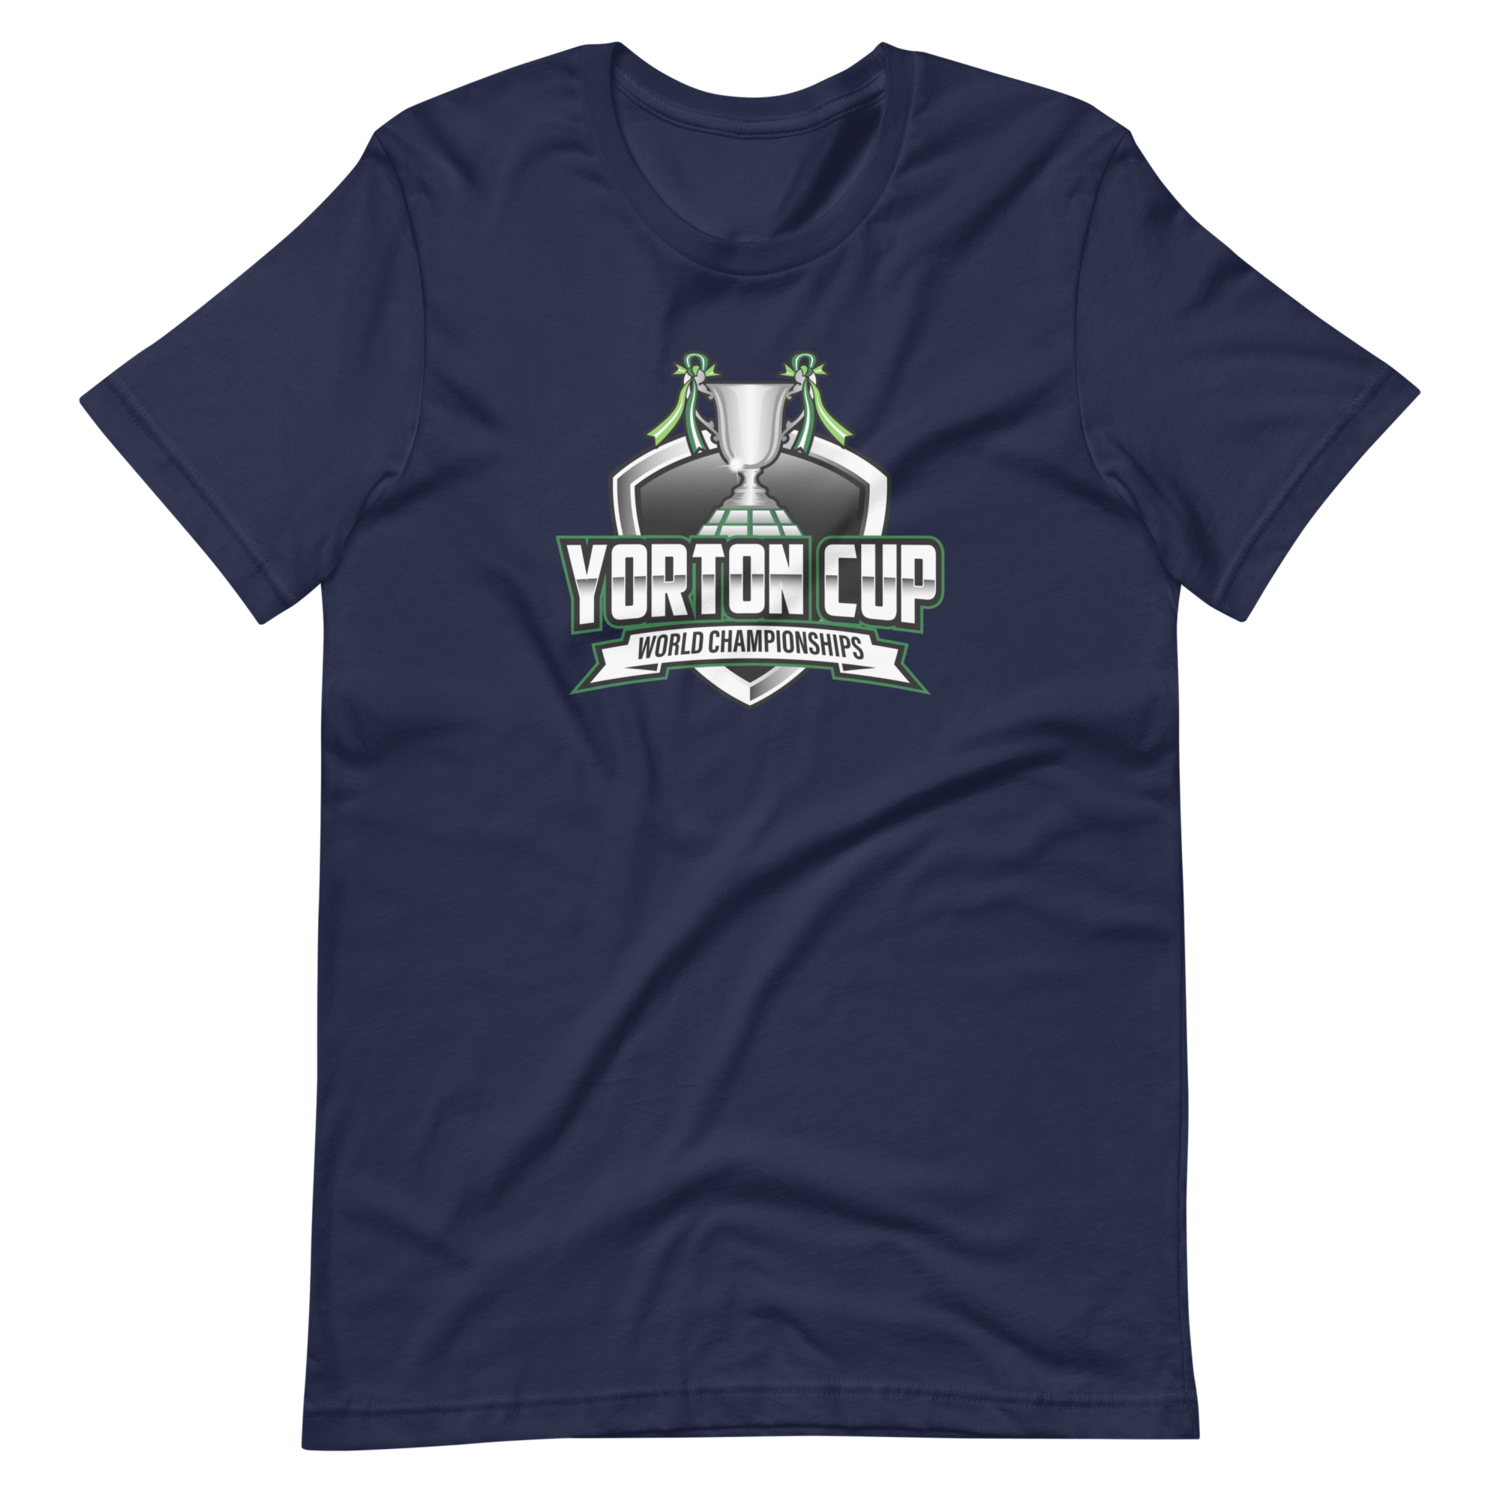 Yorton Cup - Premium Cotton Tee